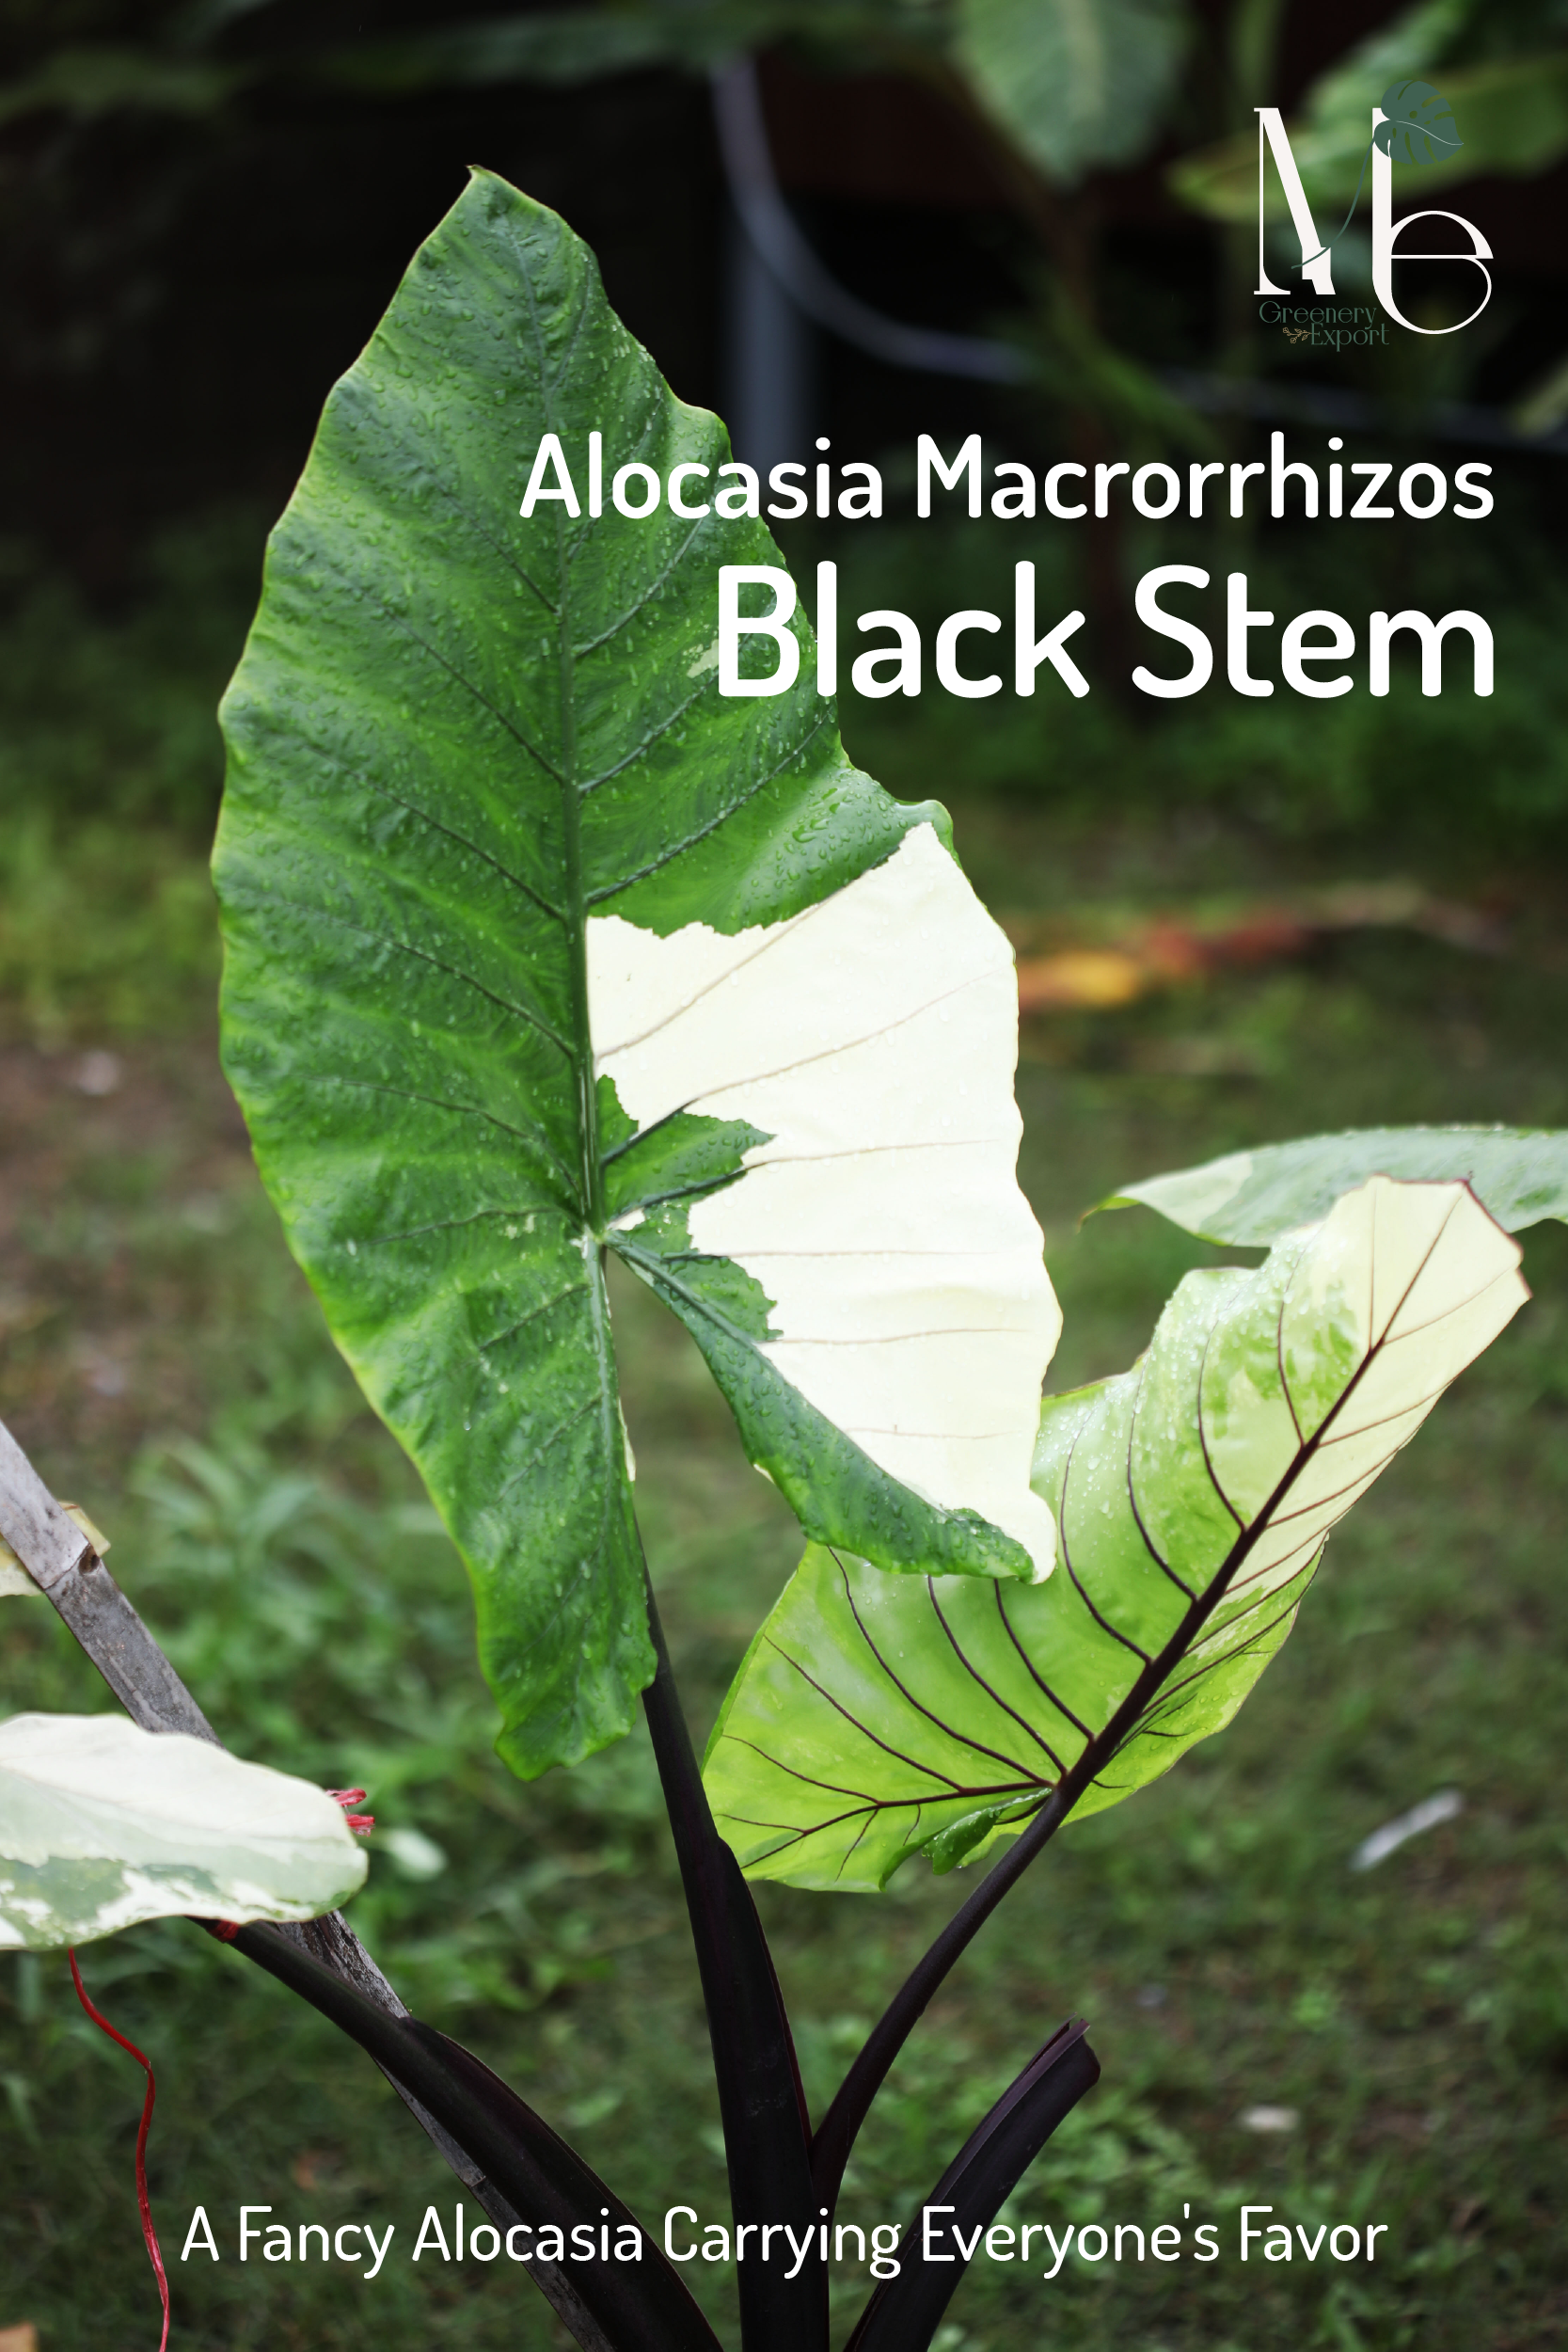 Alocasia Macrorrhizos Black Stem Variegated, a Fancy Alocasia